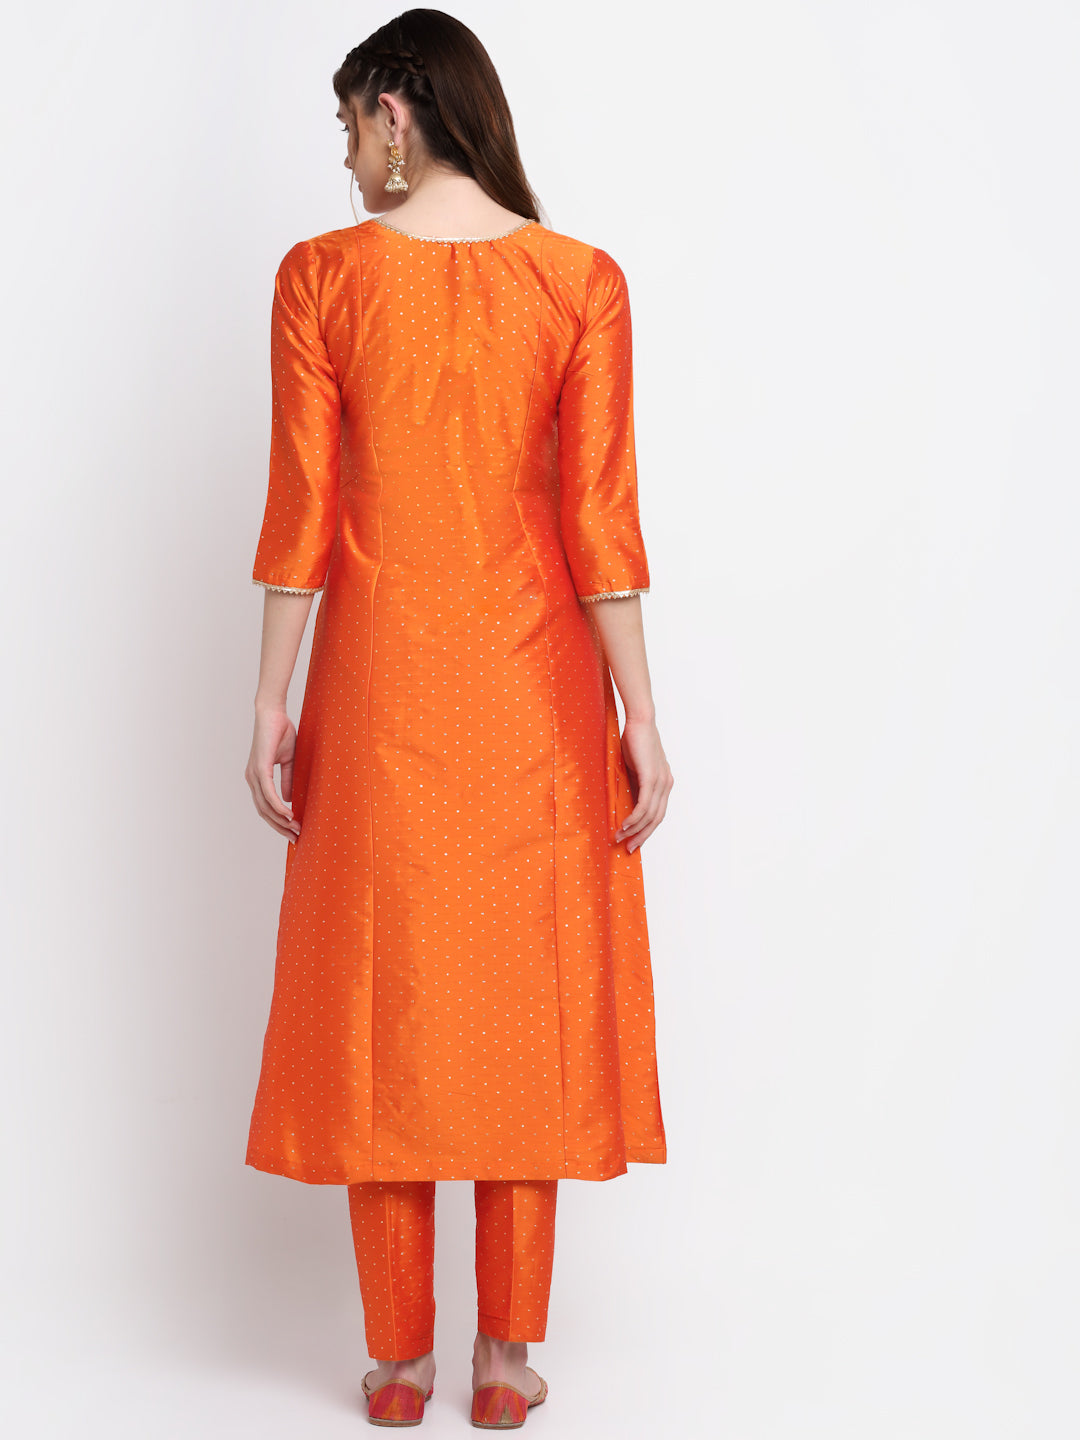 Women's Shining Orange Festive A-Line Kurti With Straight Pants - Anokherang